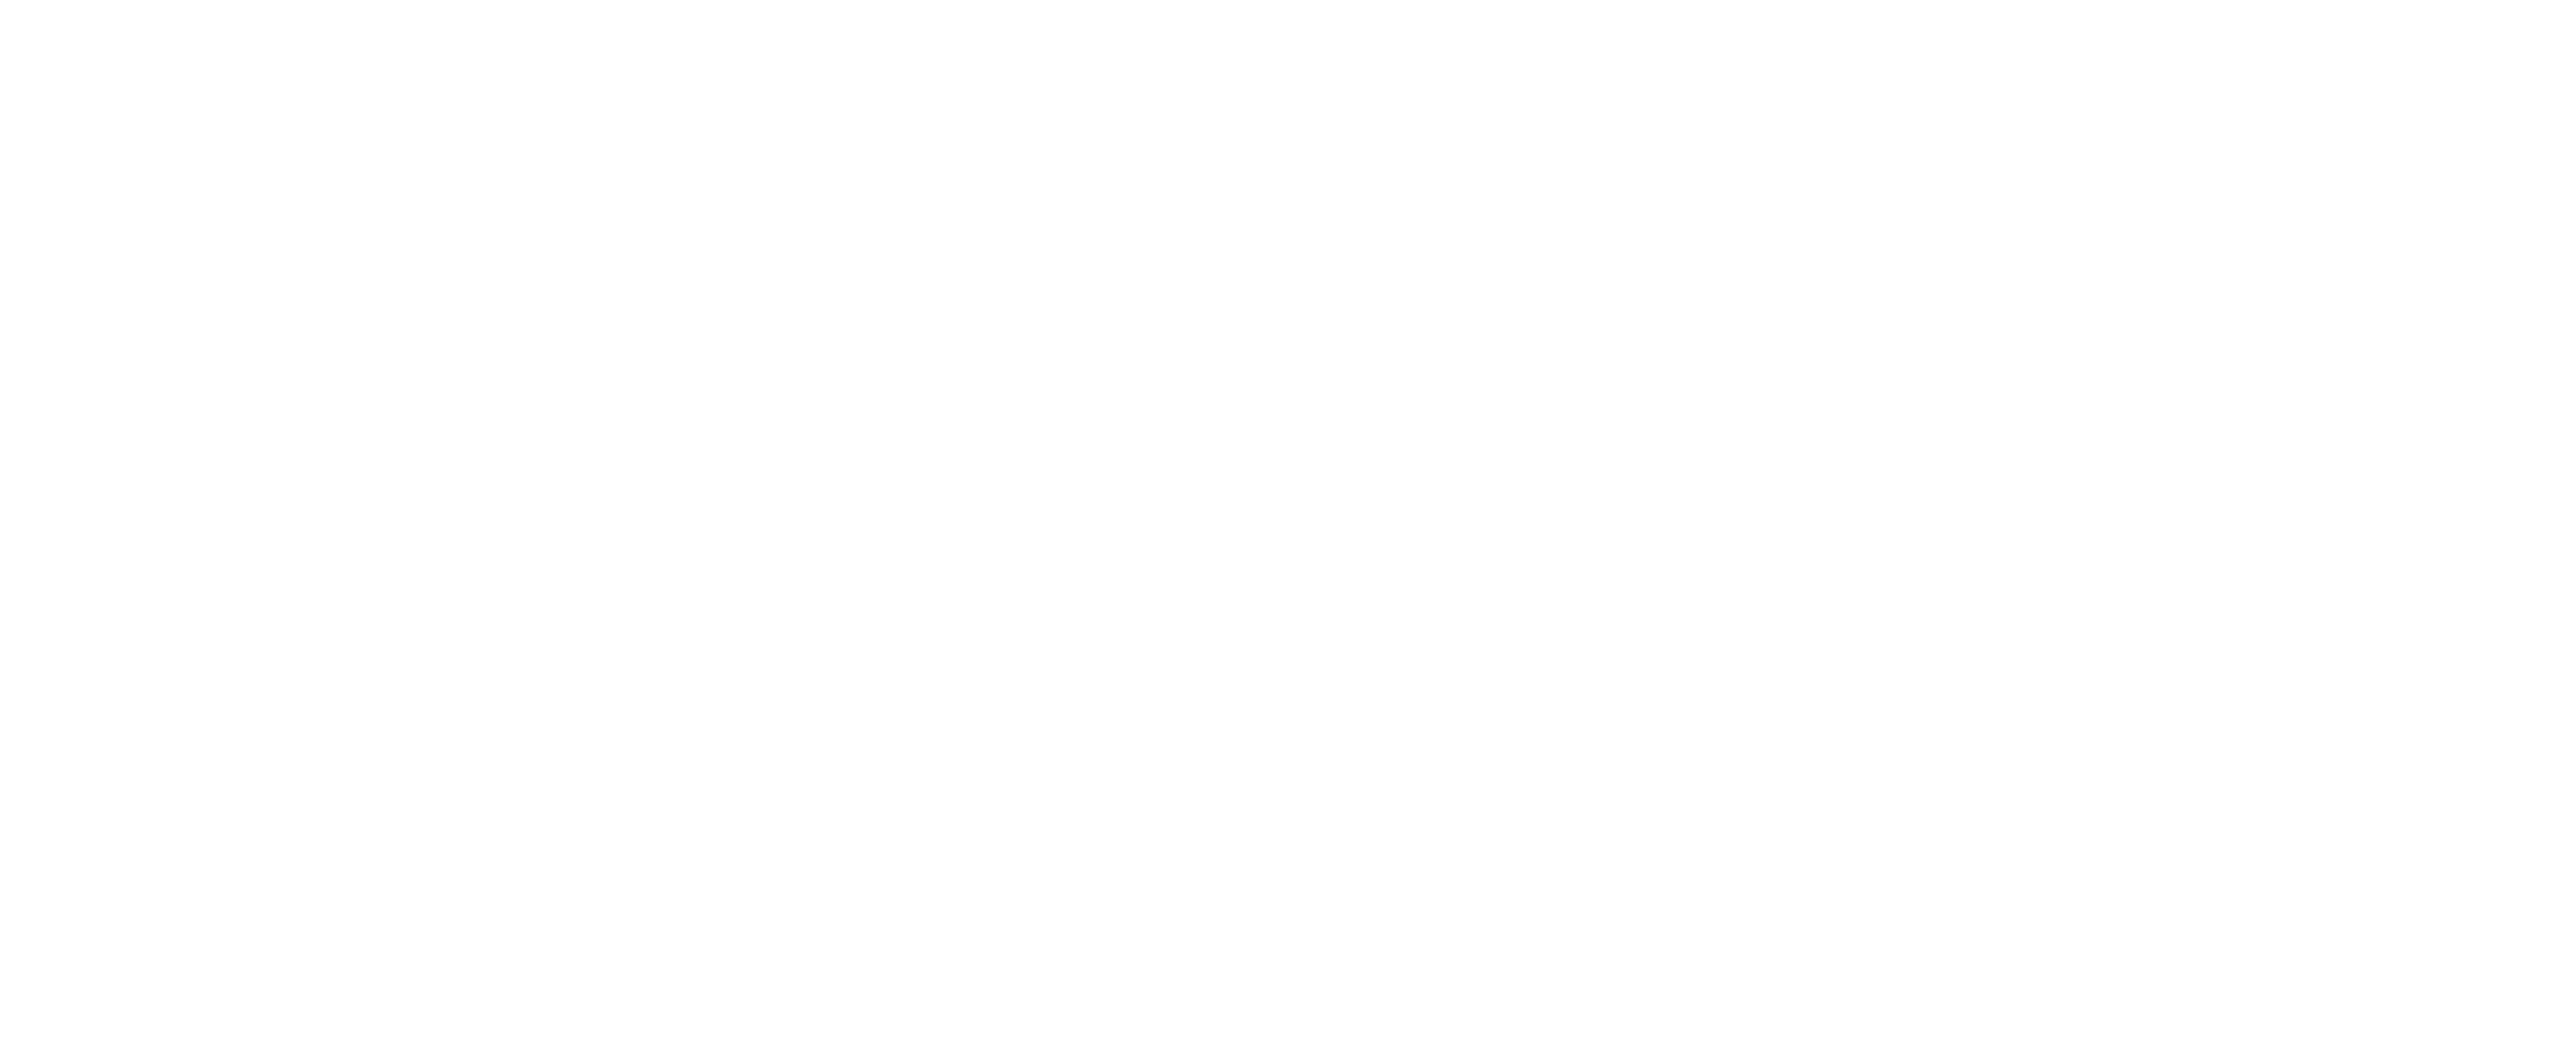 The Plastic Bag logo